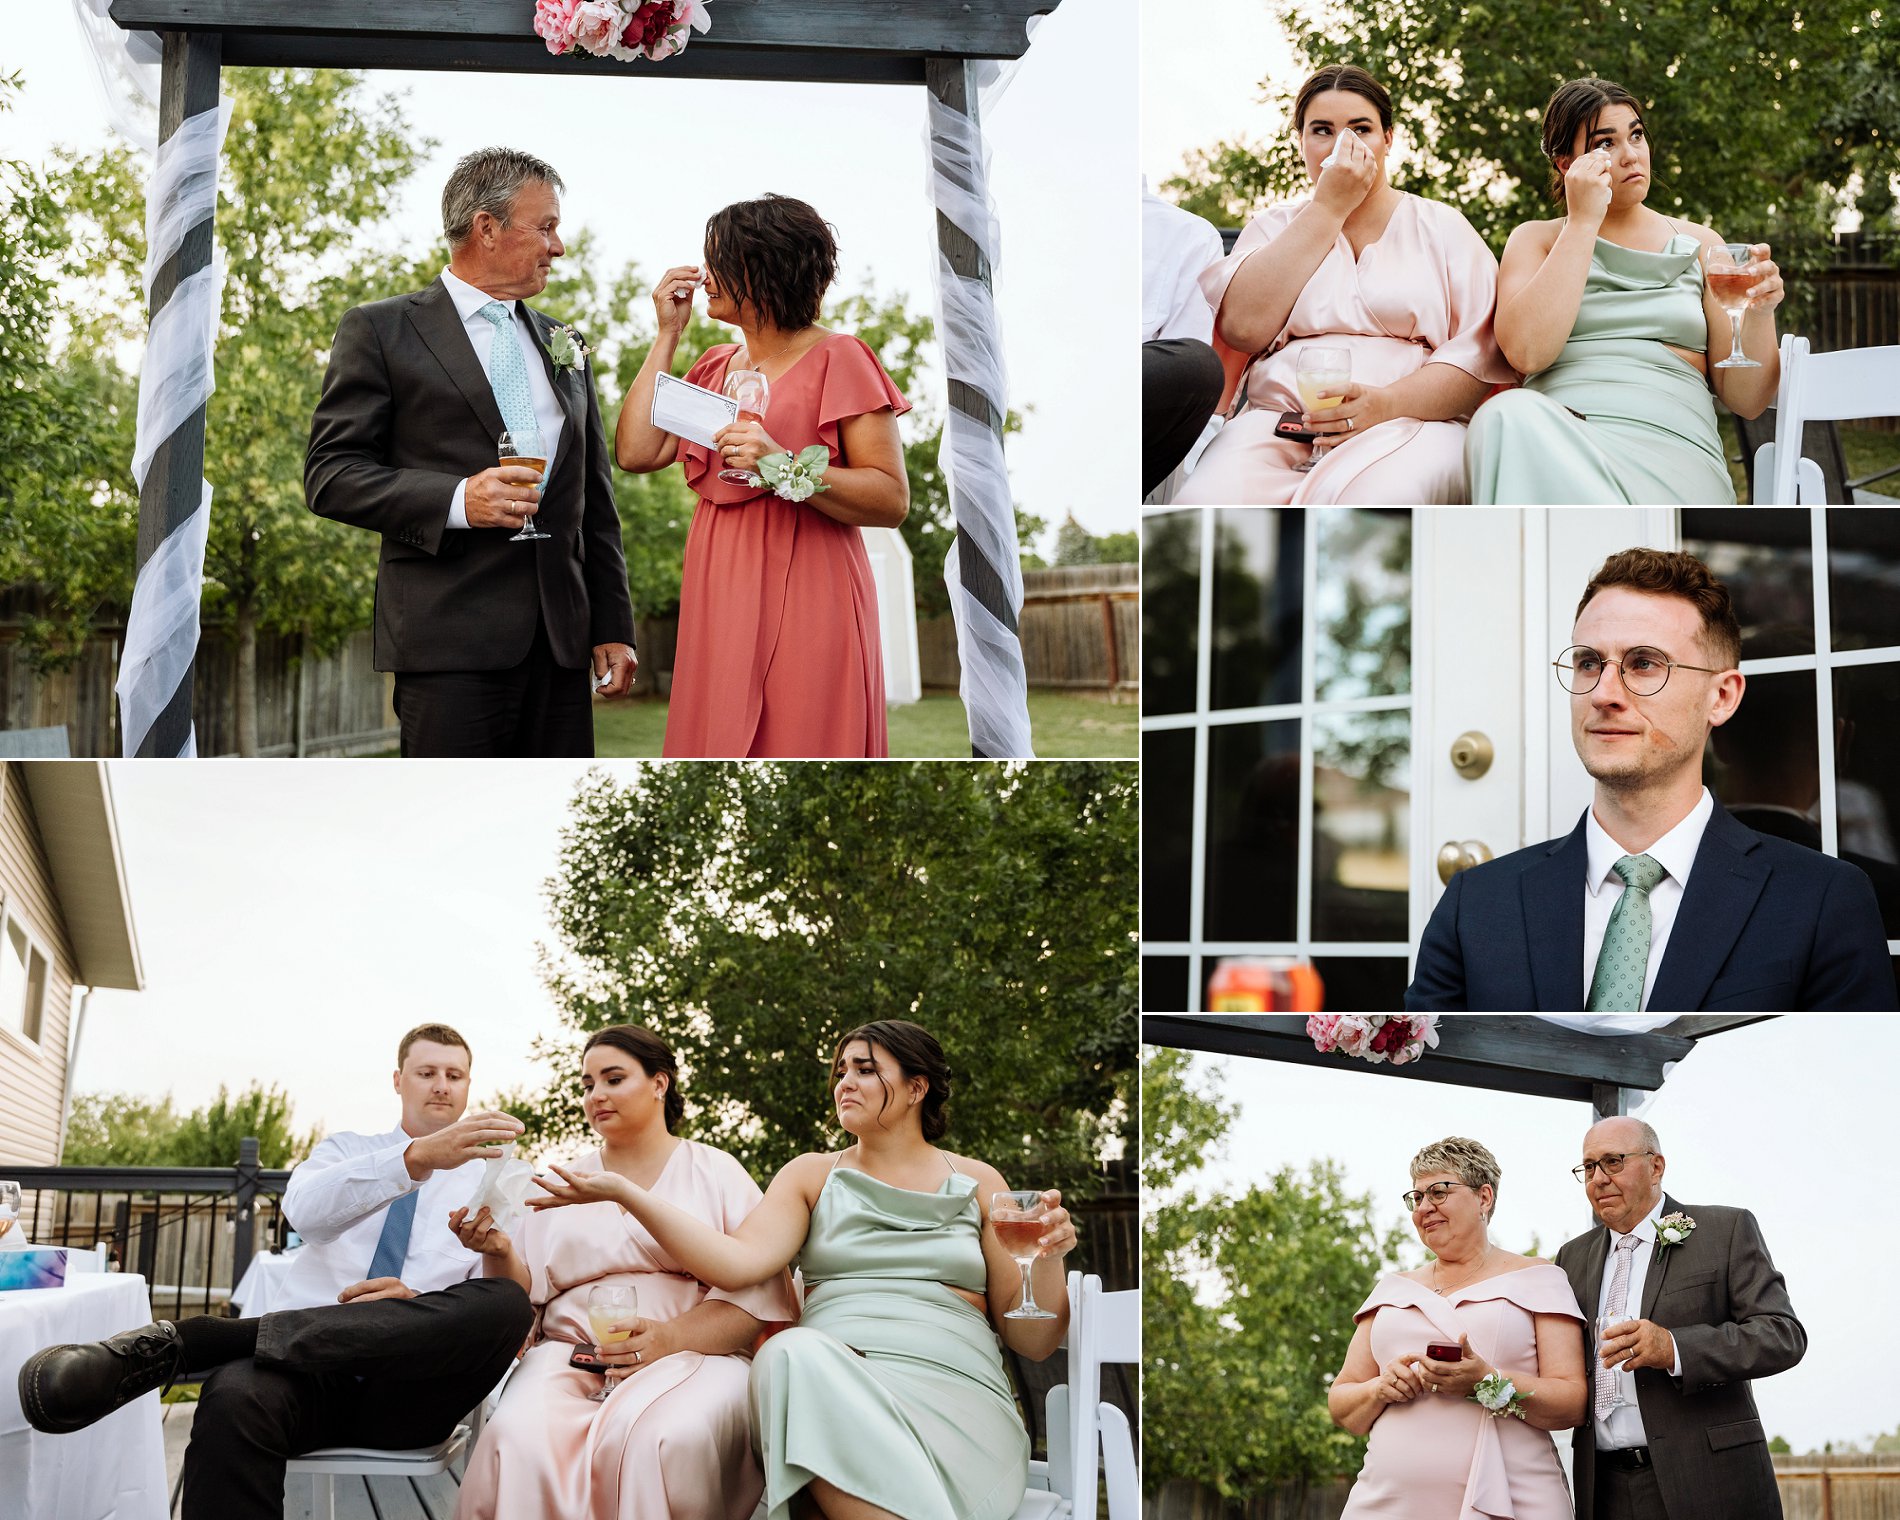 Emotional speeches at a Saskatoon outdoor wedding during golden hour.